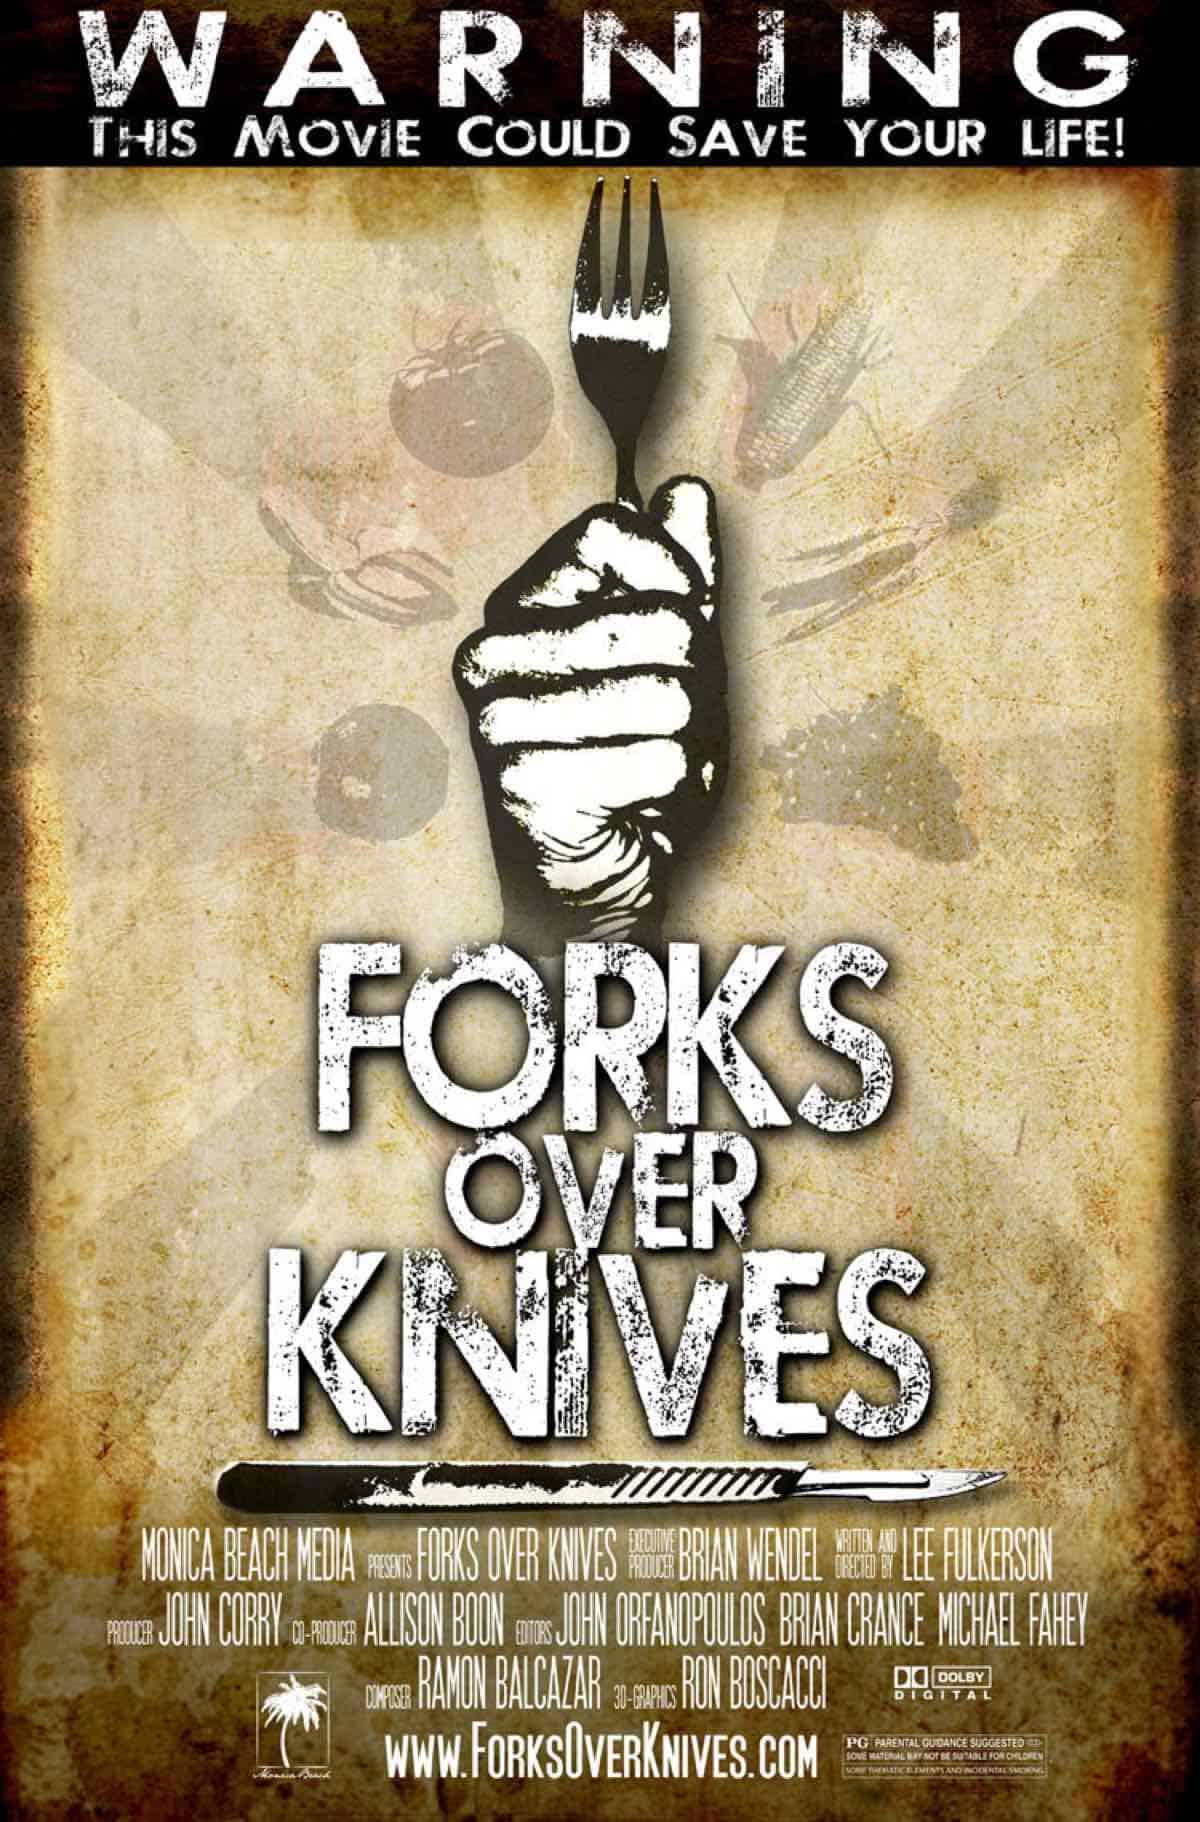 Forks Over Knives documentary poster. 